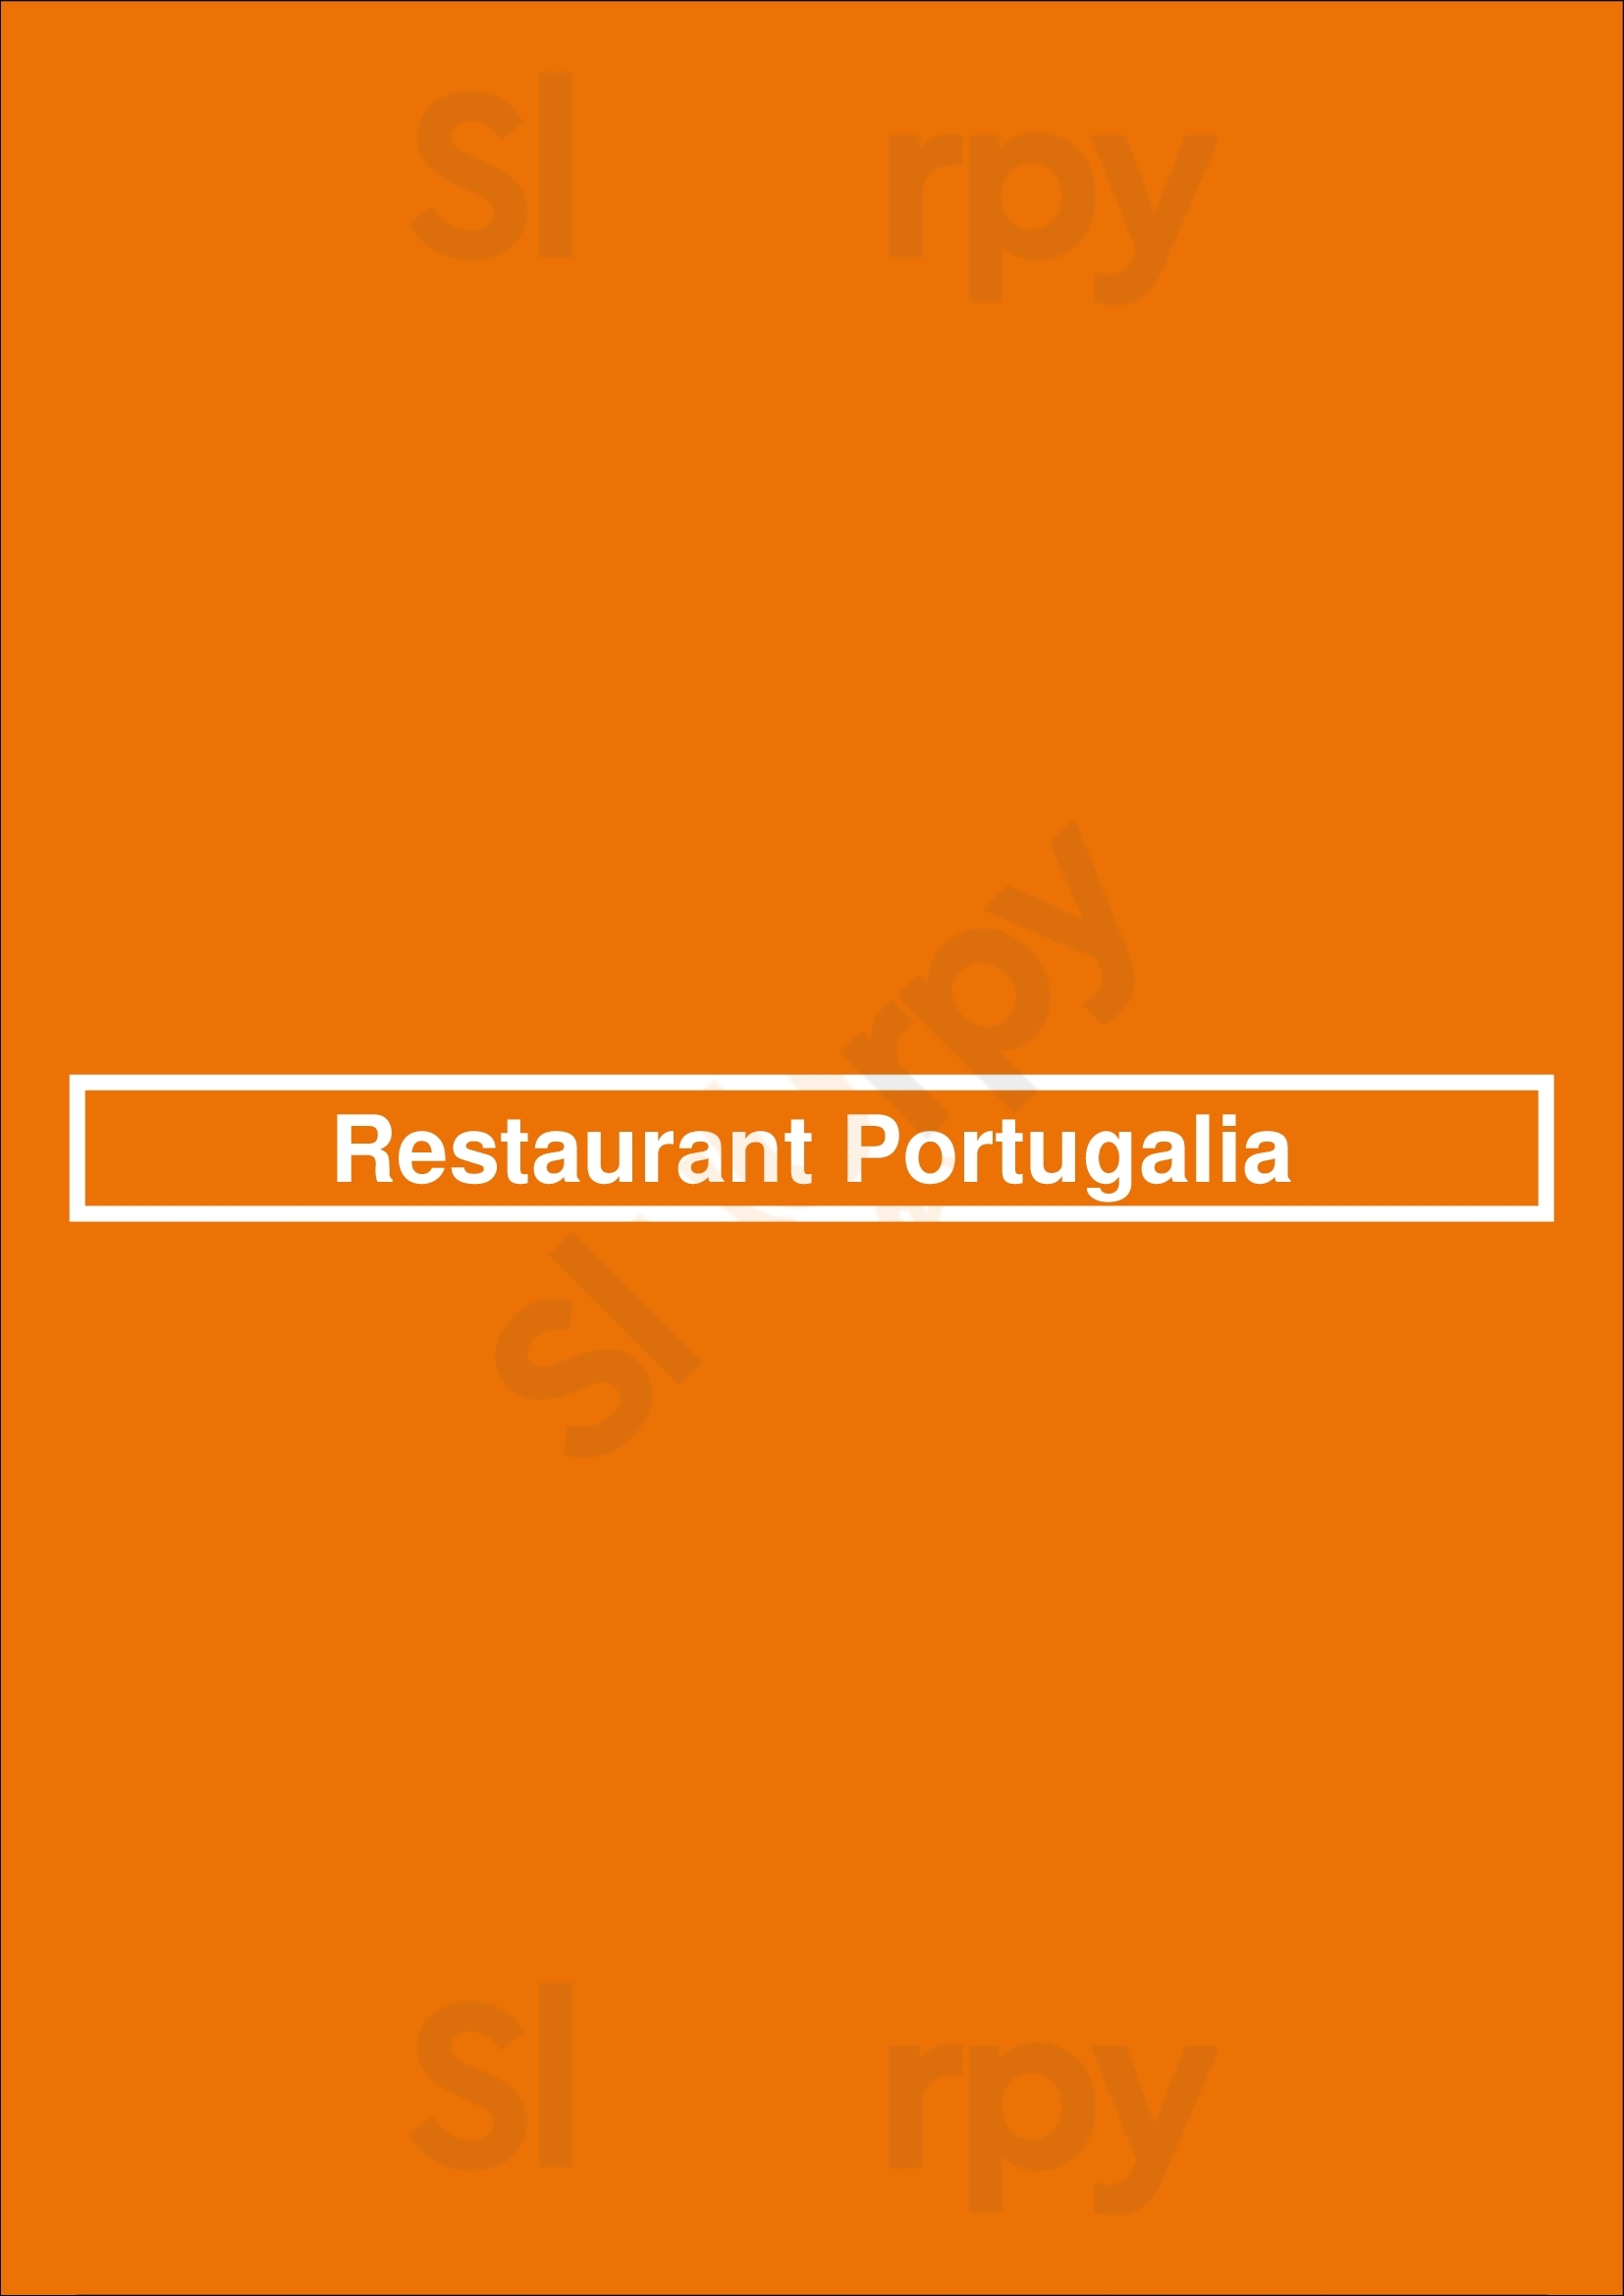 Restaurant Portugalia Amsterdam Menu - 1